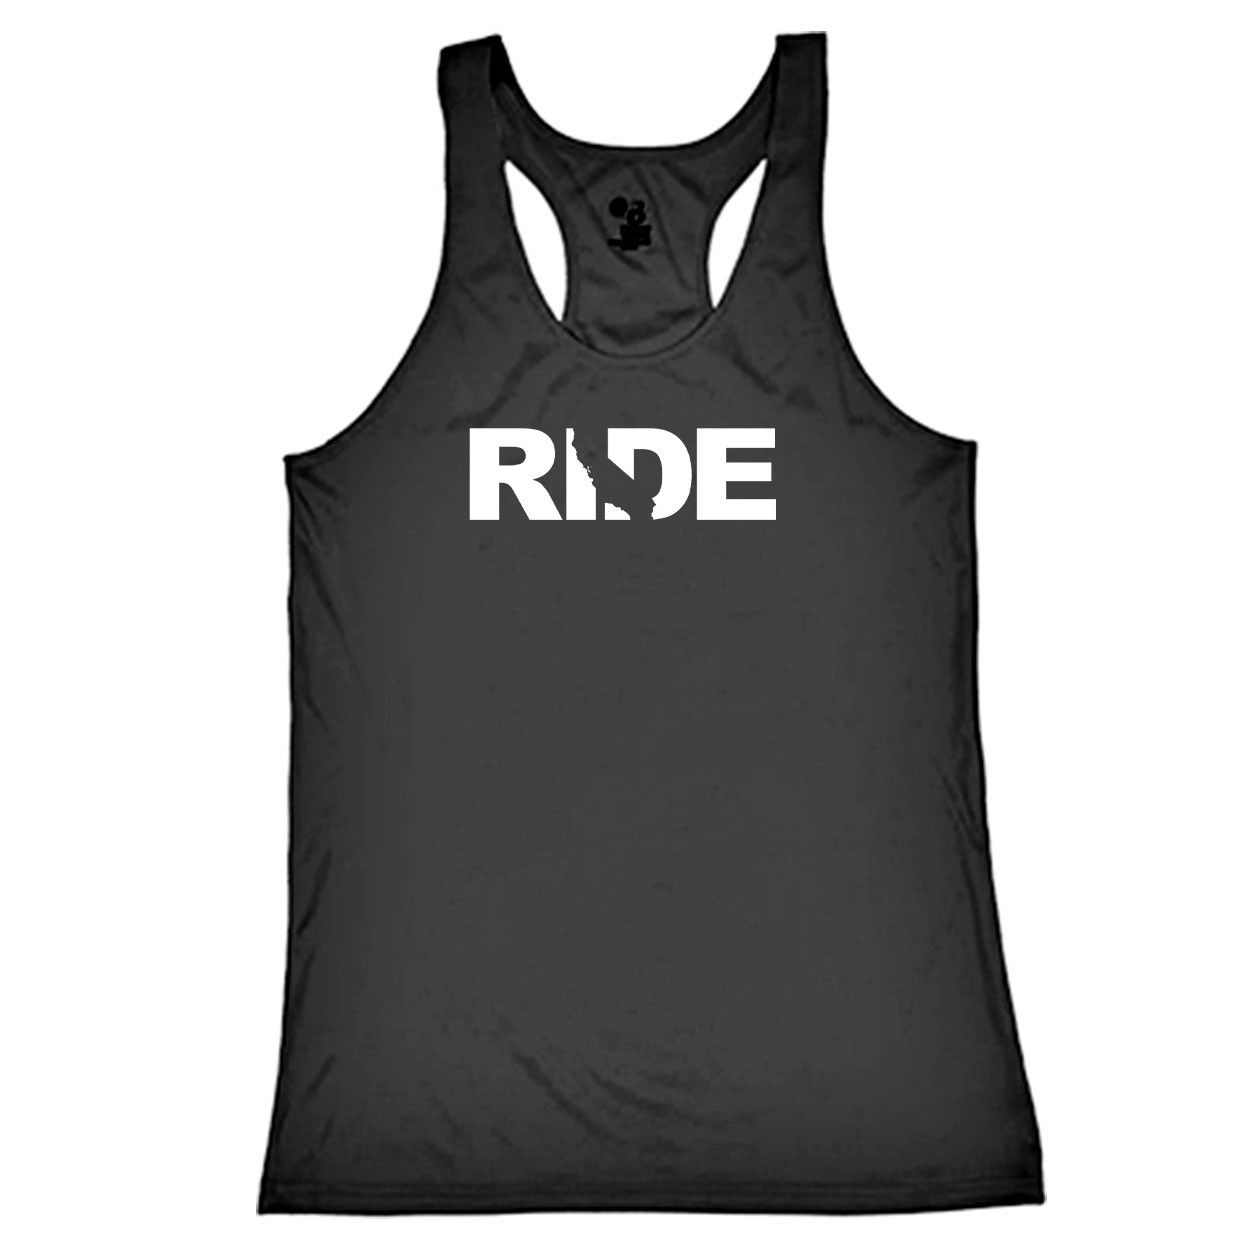 Ride California Classic Youth Girls Performance Racerback Tank Top Black (White Logo)